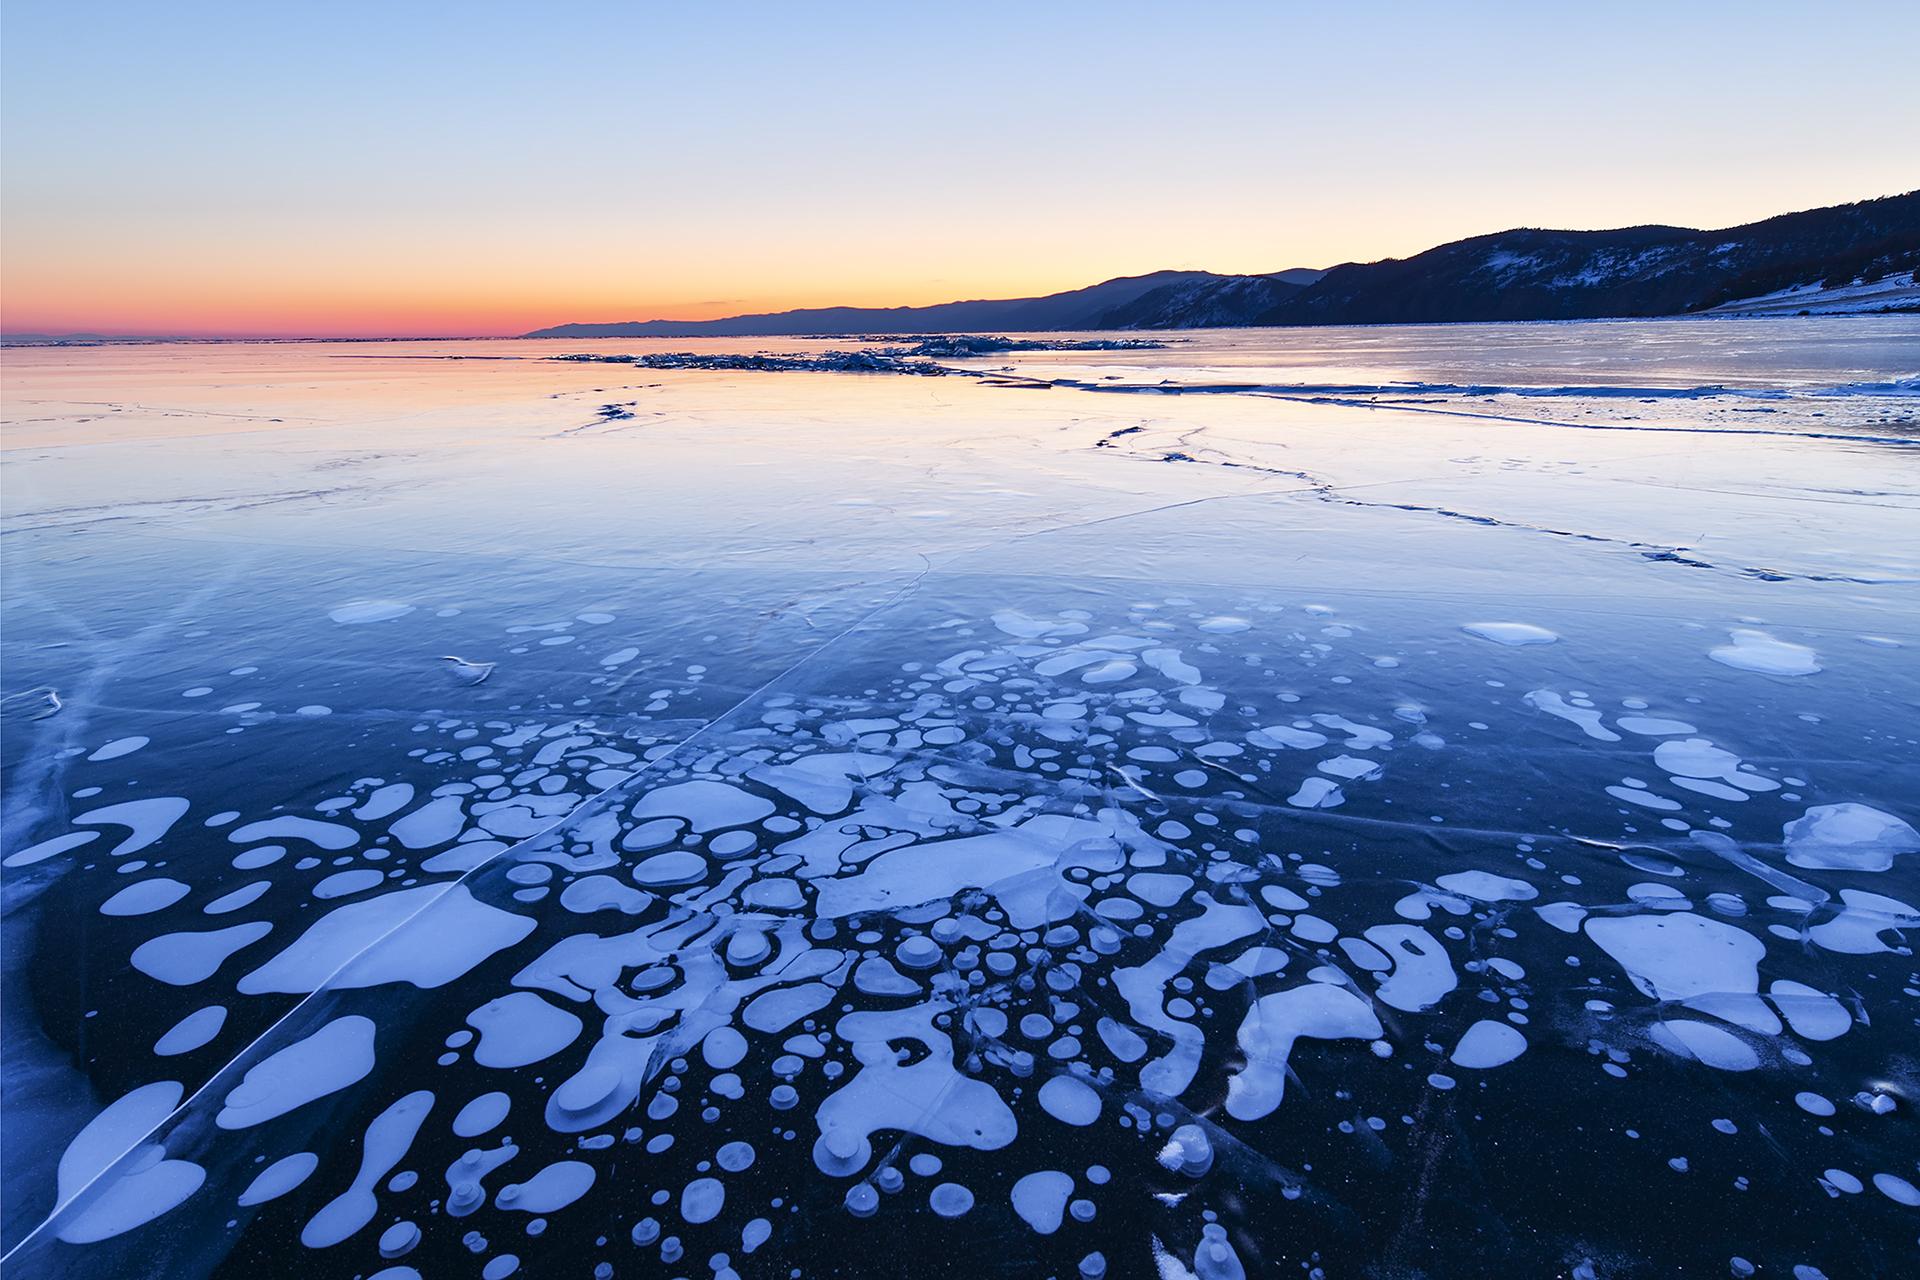 London Photography Awards Winner - Wonderful moment of Lake Baikal